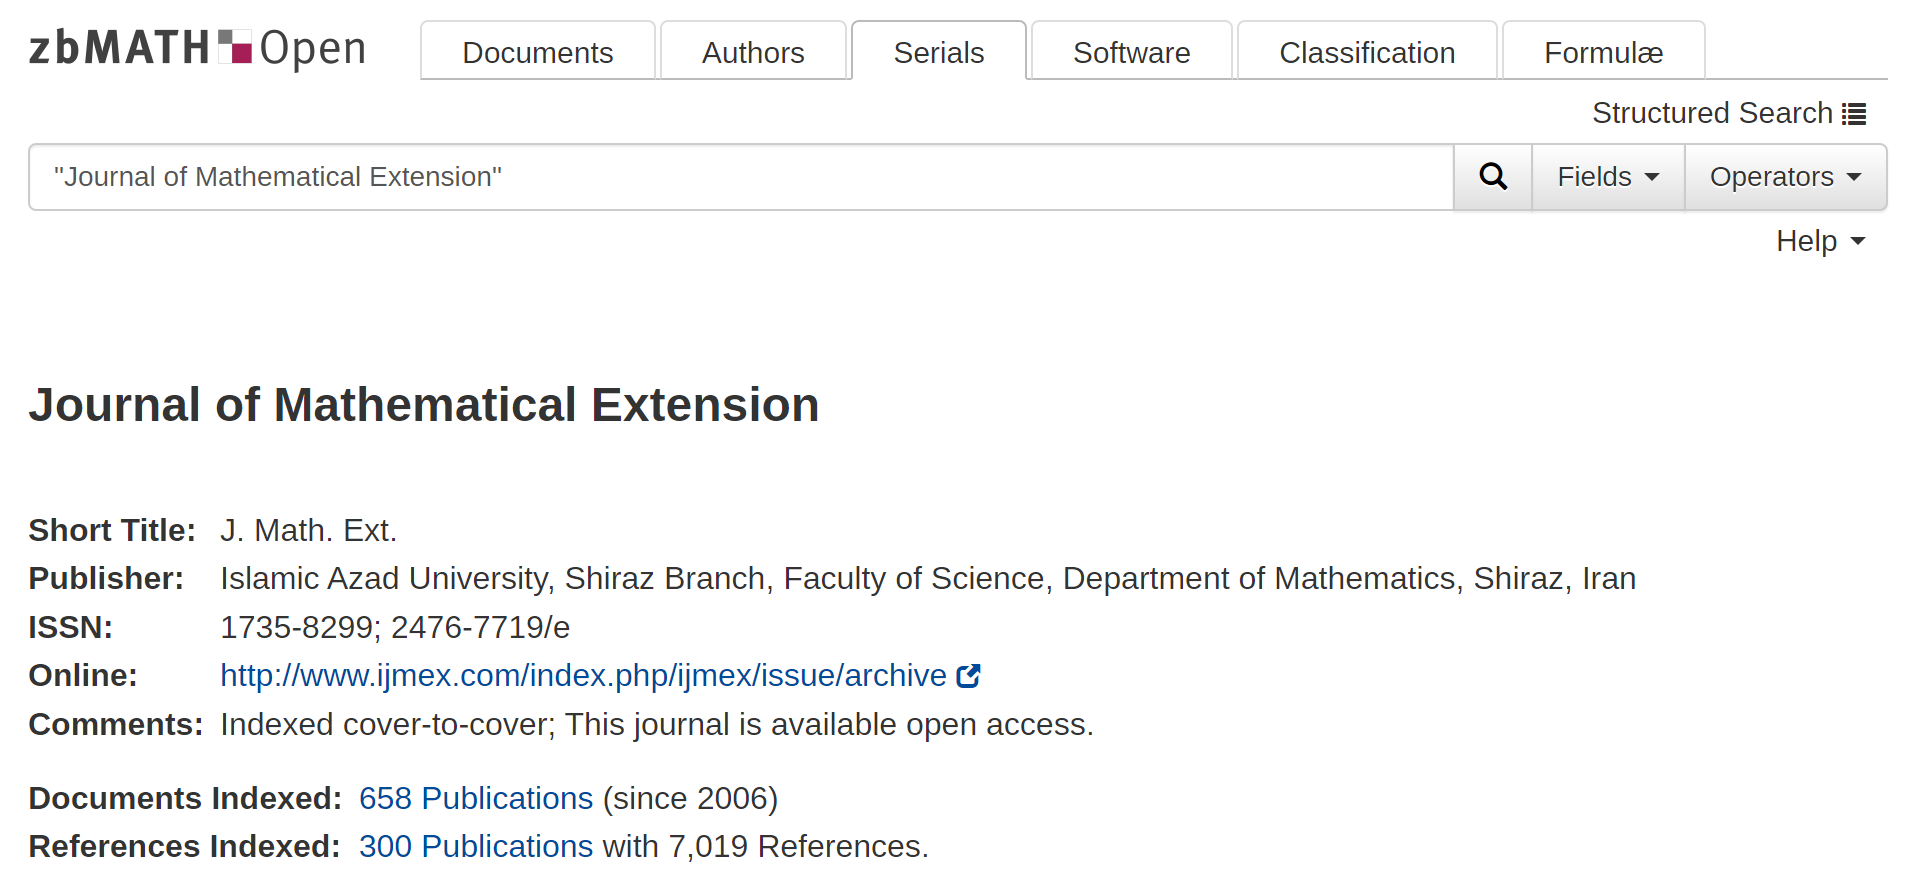 zbMATH Open - Journal of Mathematical Extension